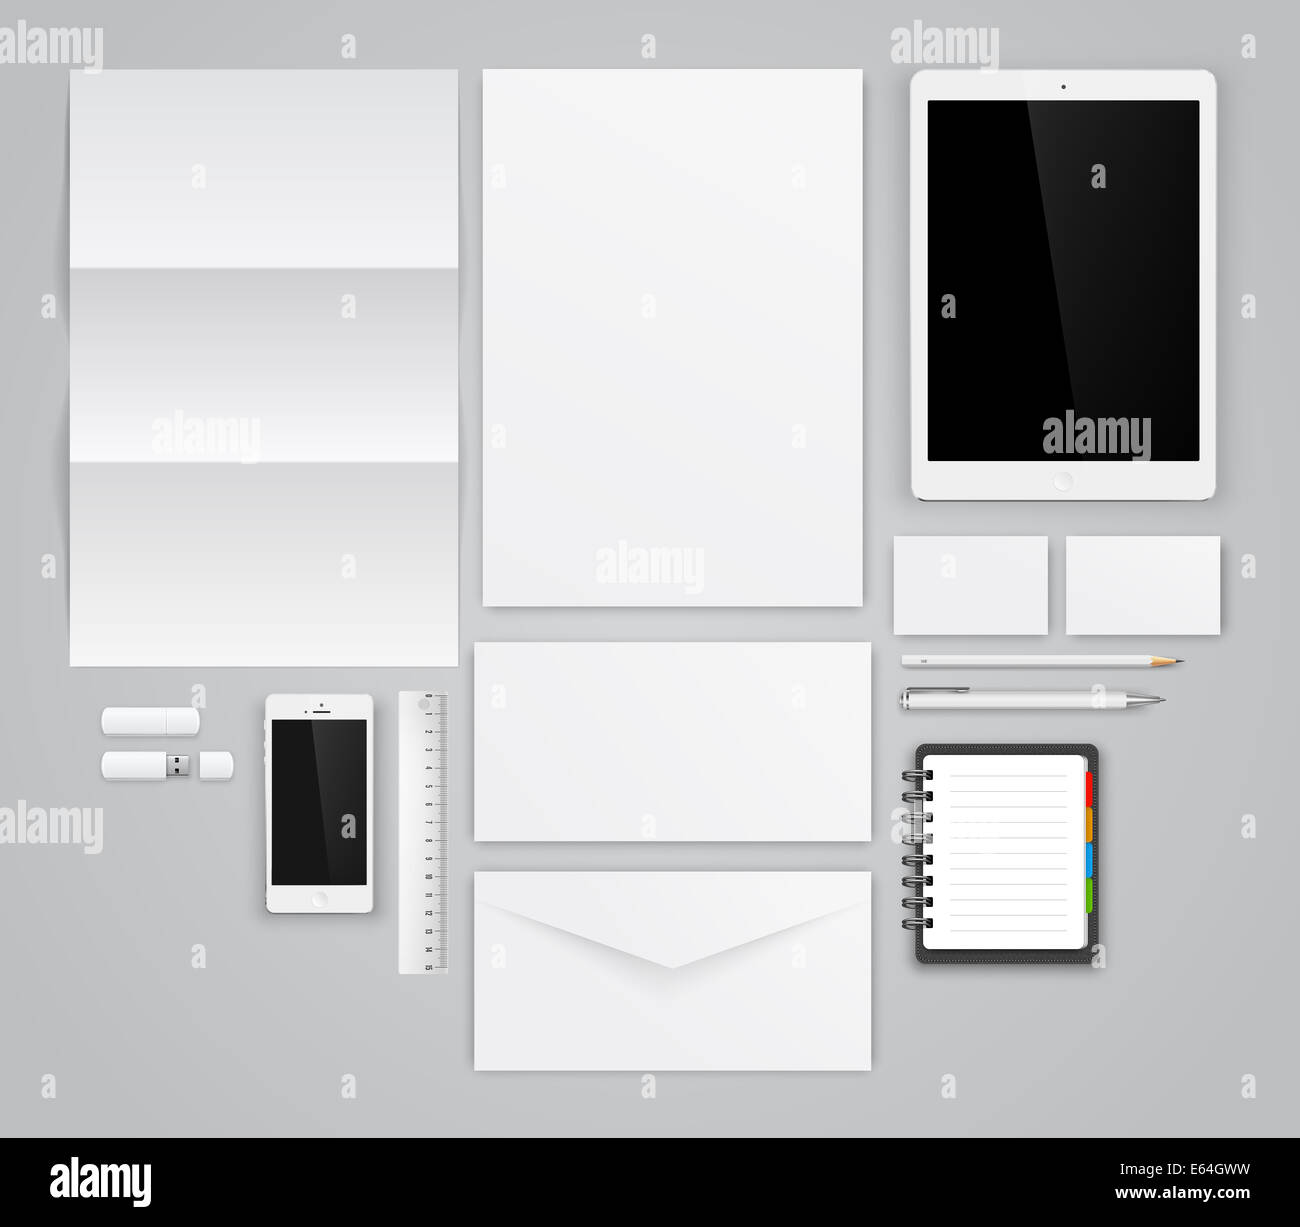 Template for branding identity. Vector graphic design presentations and portfolios. Stock Photo